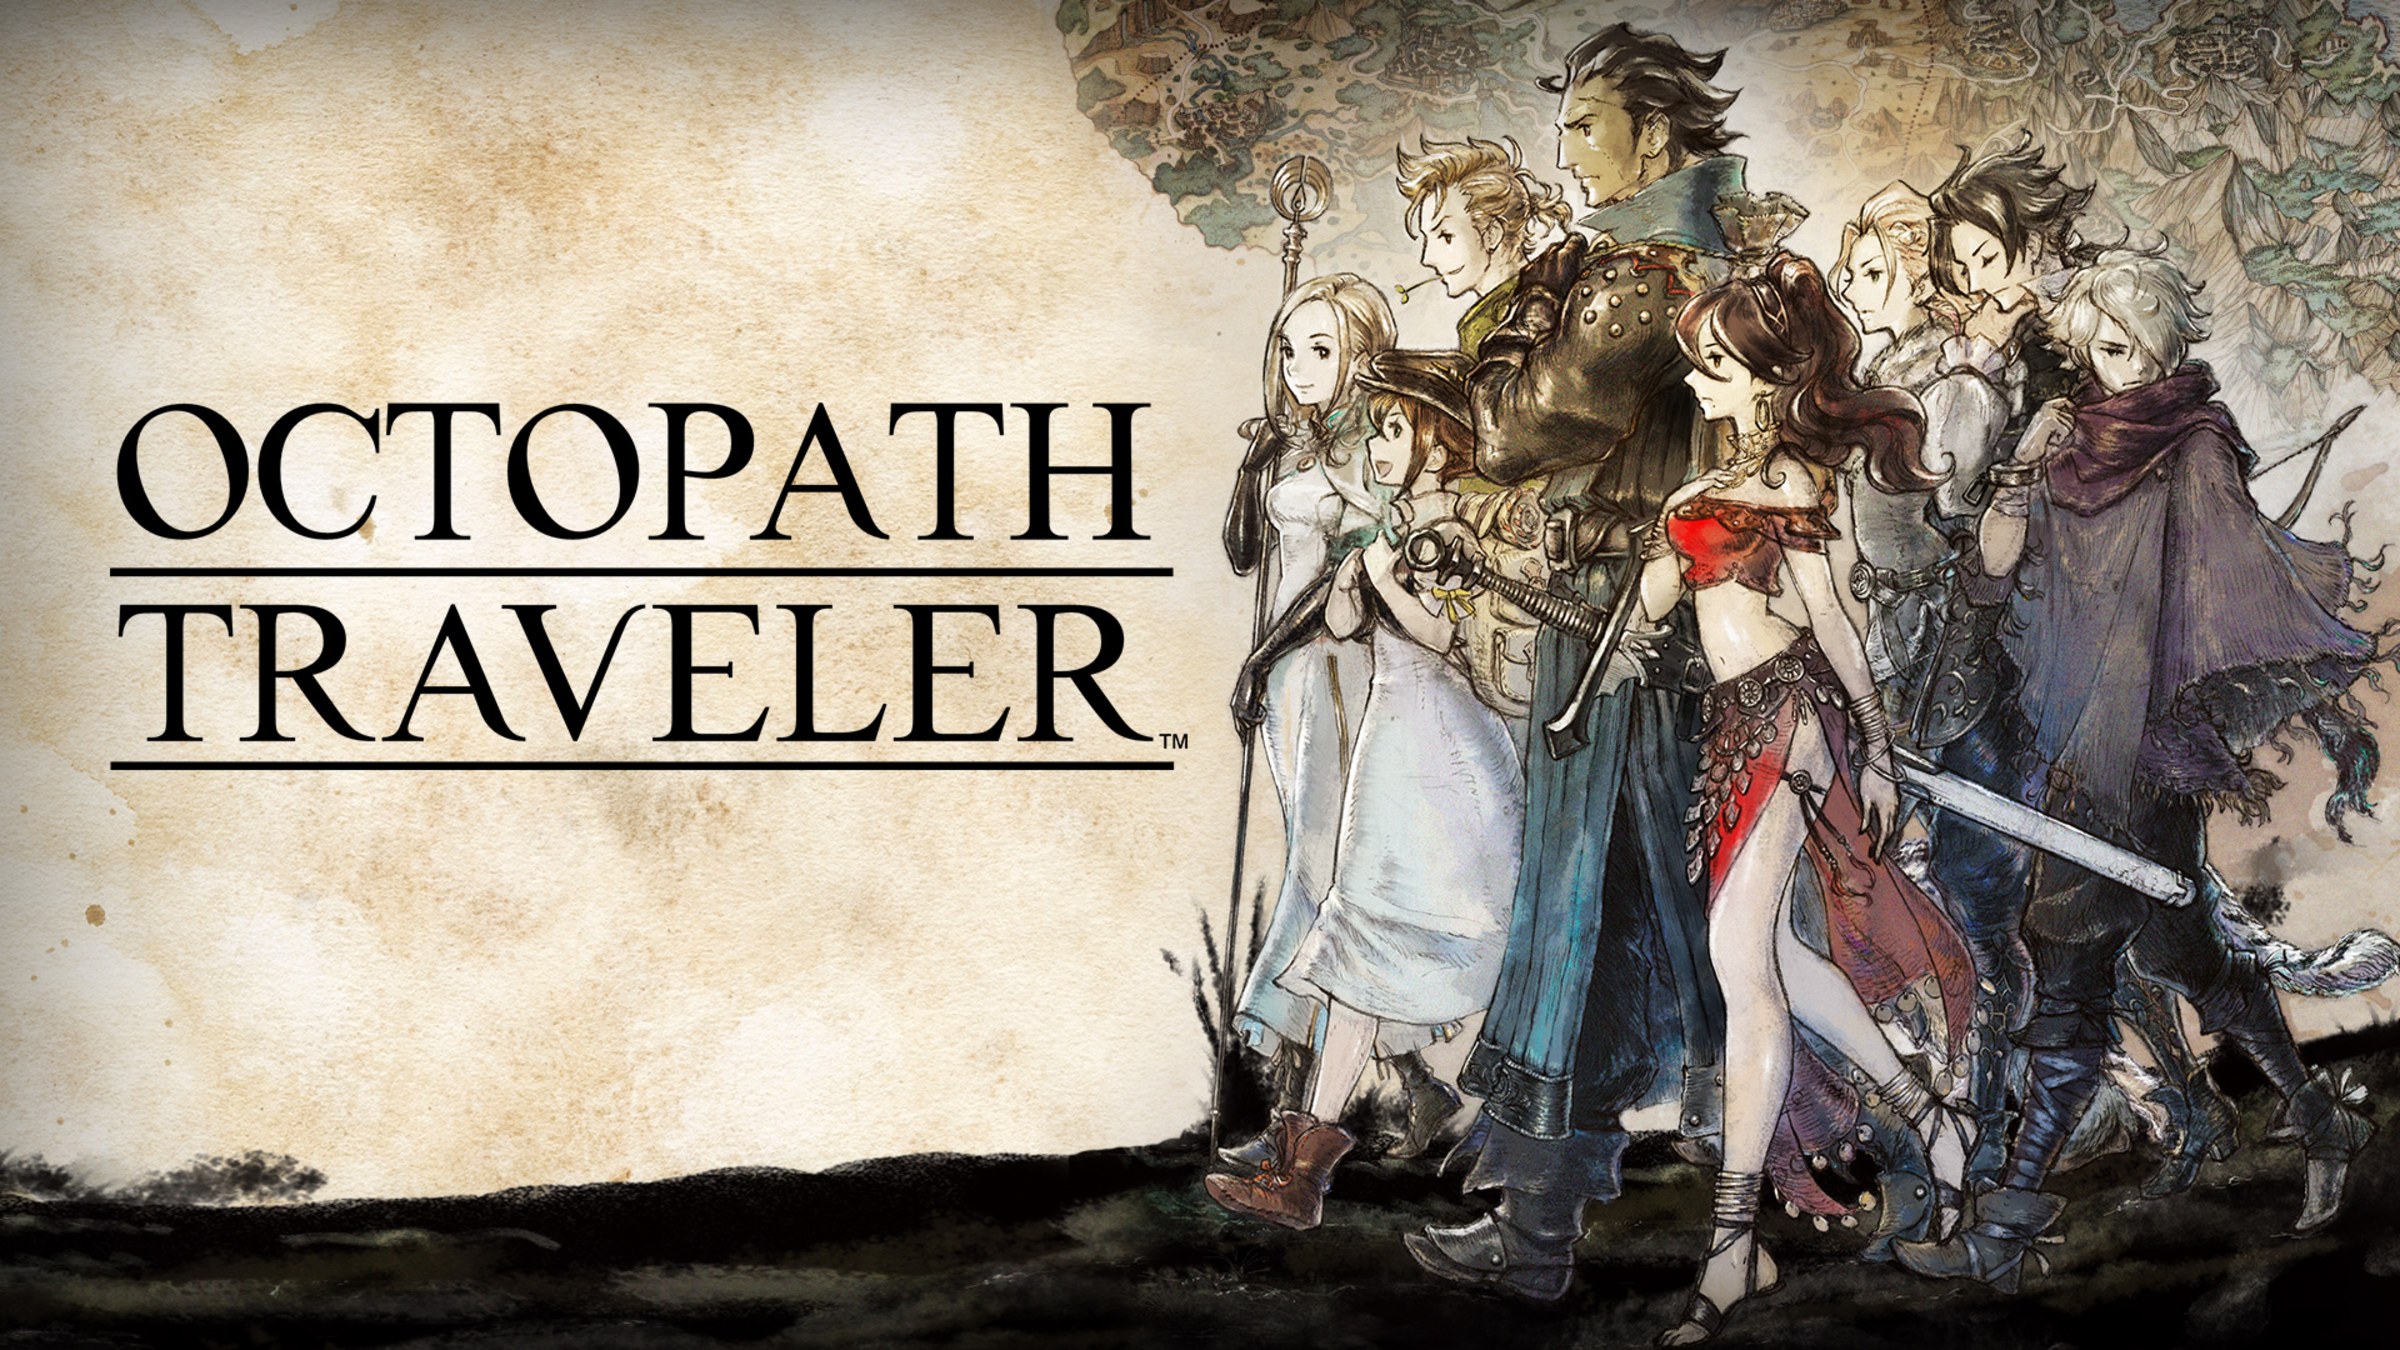 Octopath Traveler™ for Nintendo Switch - Official Nintendo Site